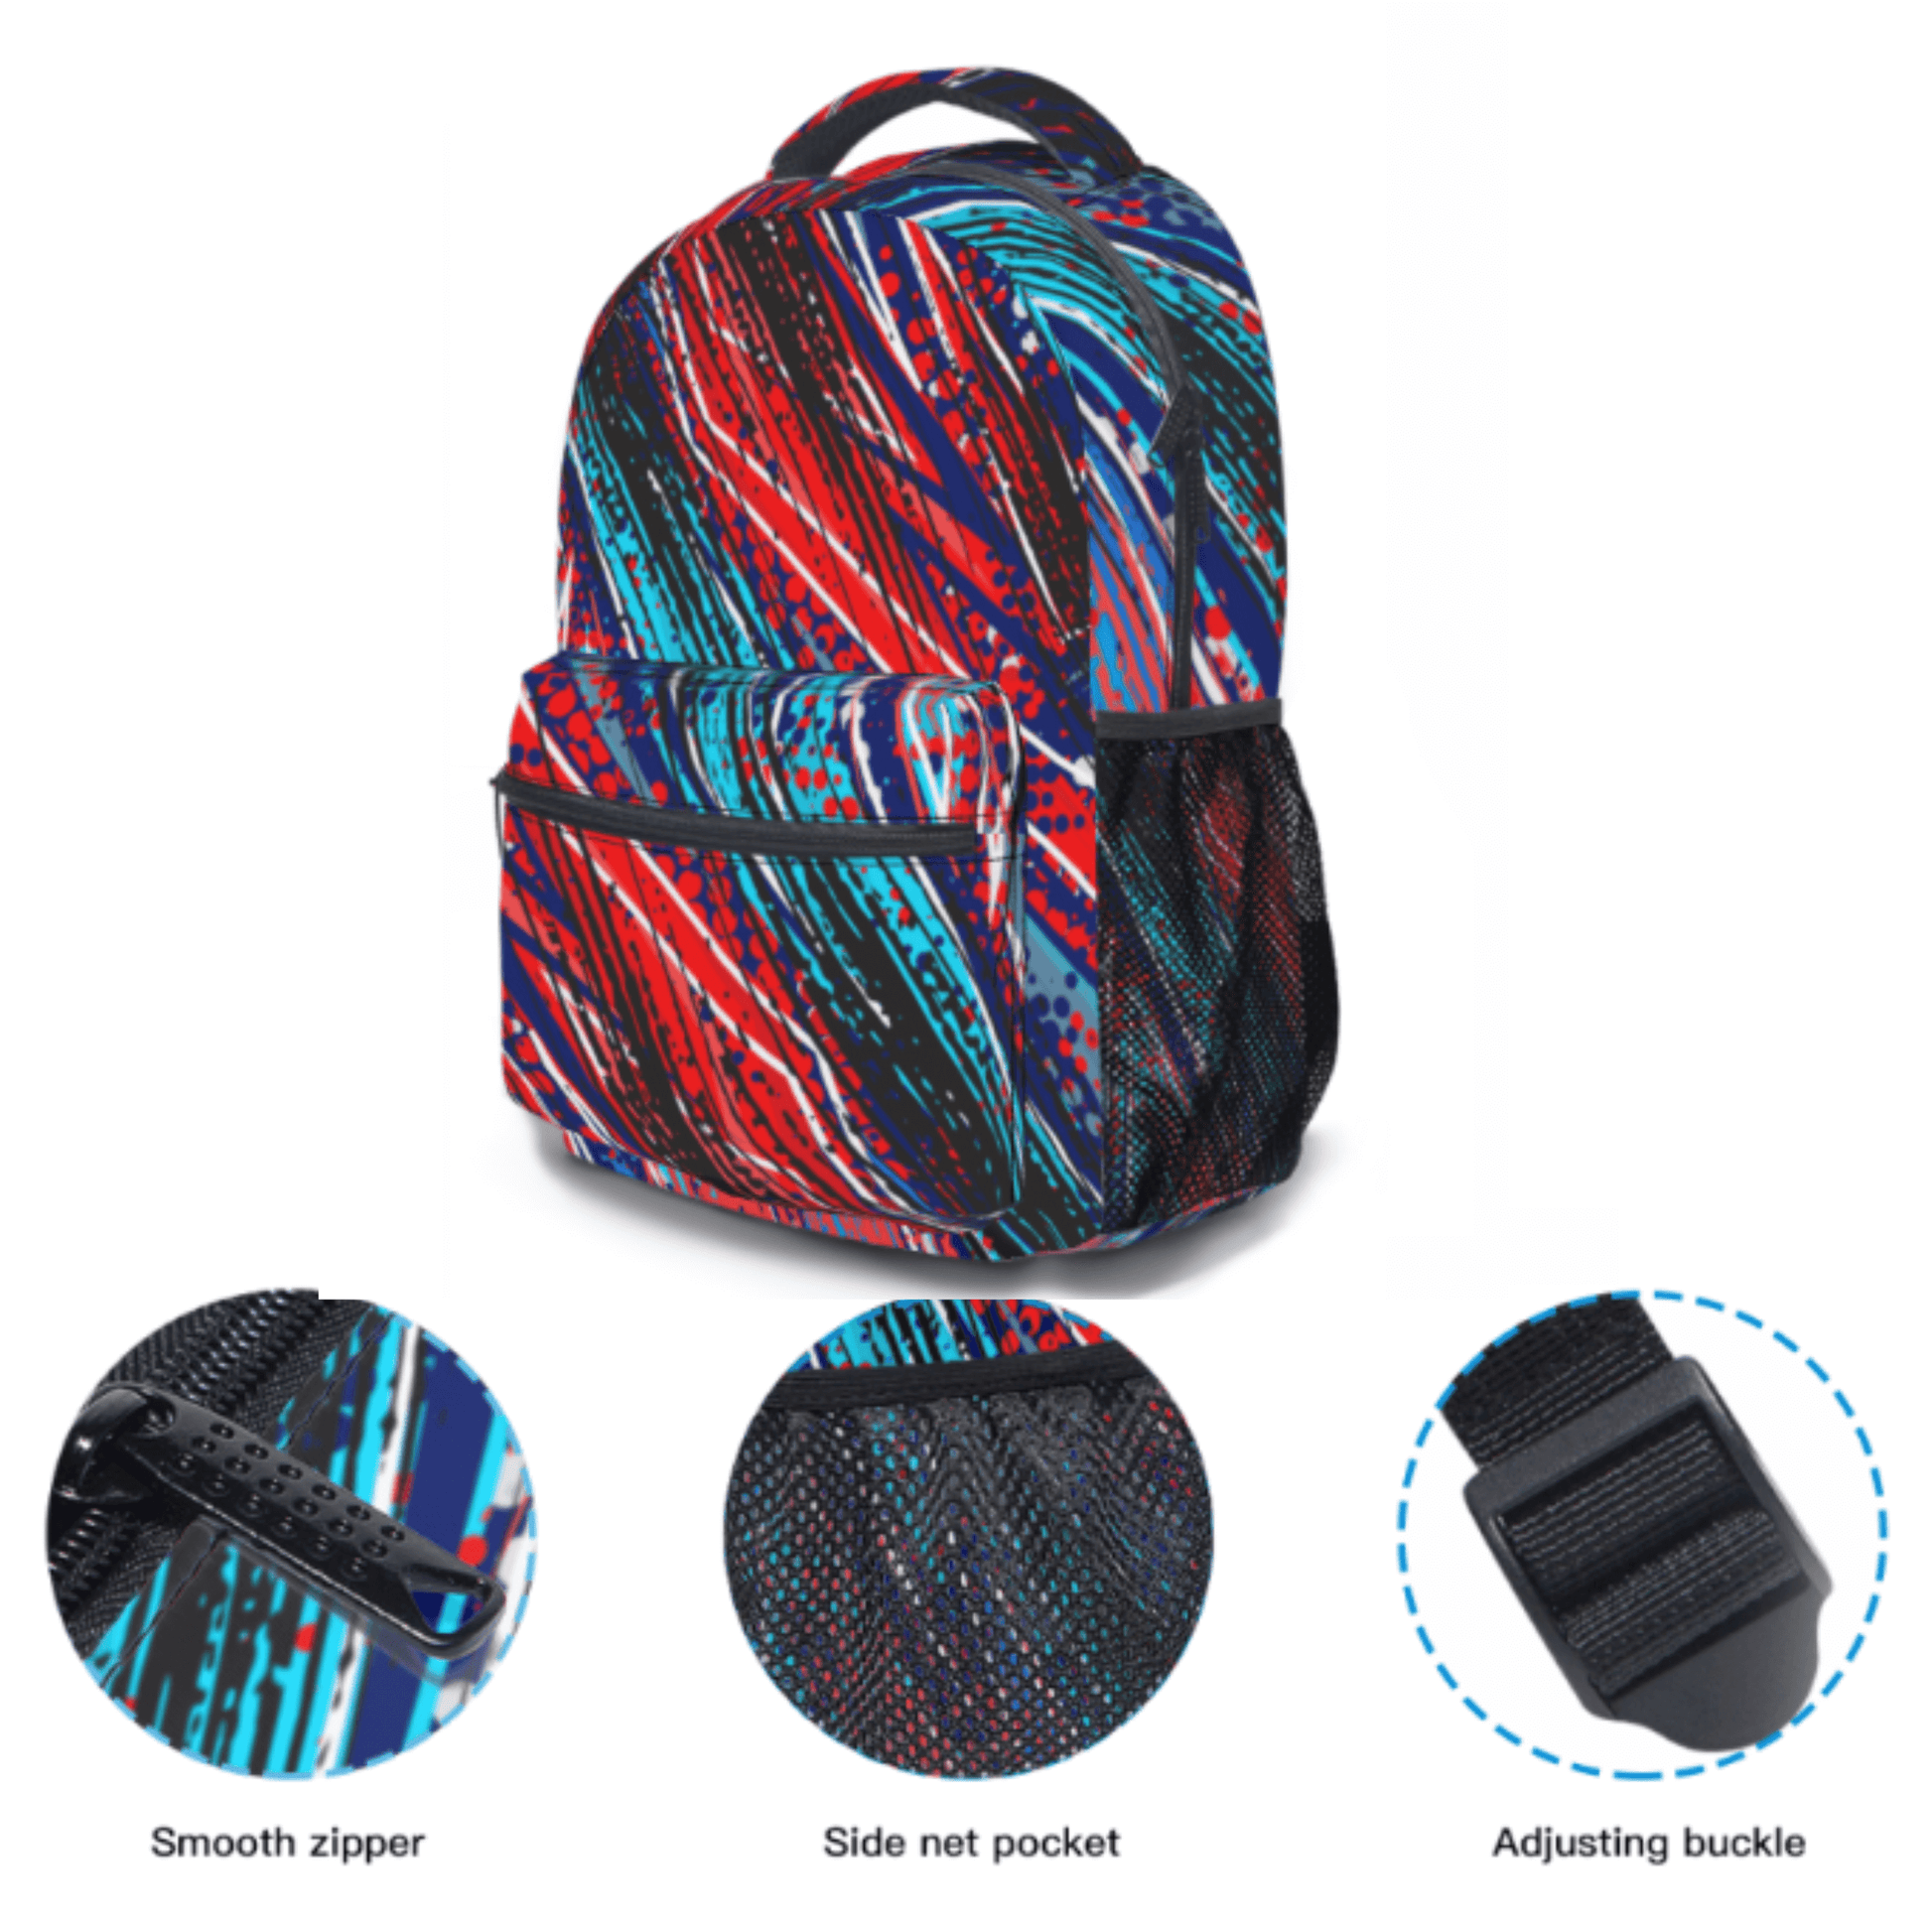 up close details of our kids backpack show a smooth zipper, side net pocket and adjusting black buckle.